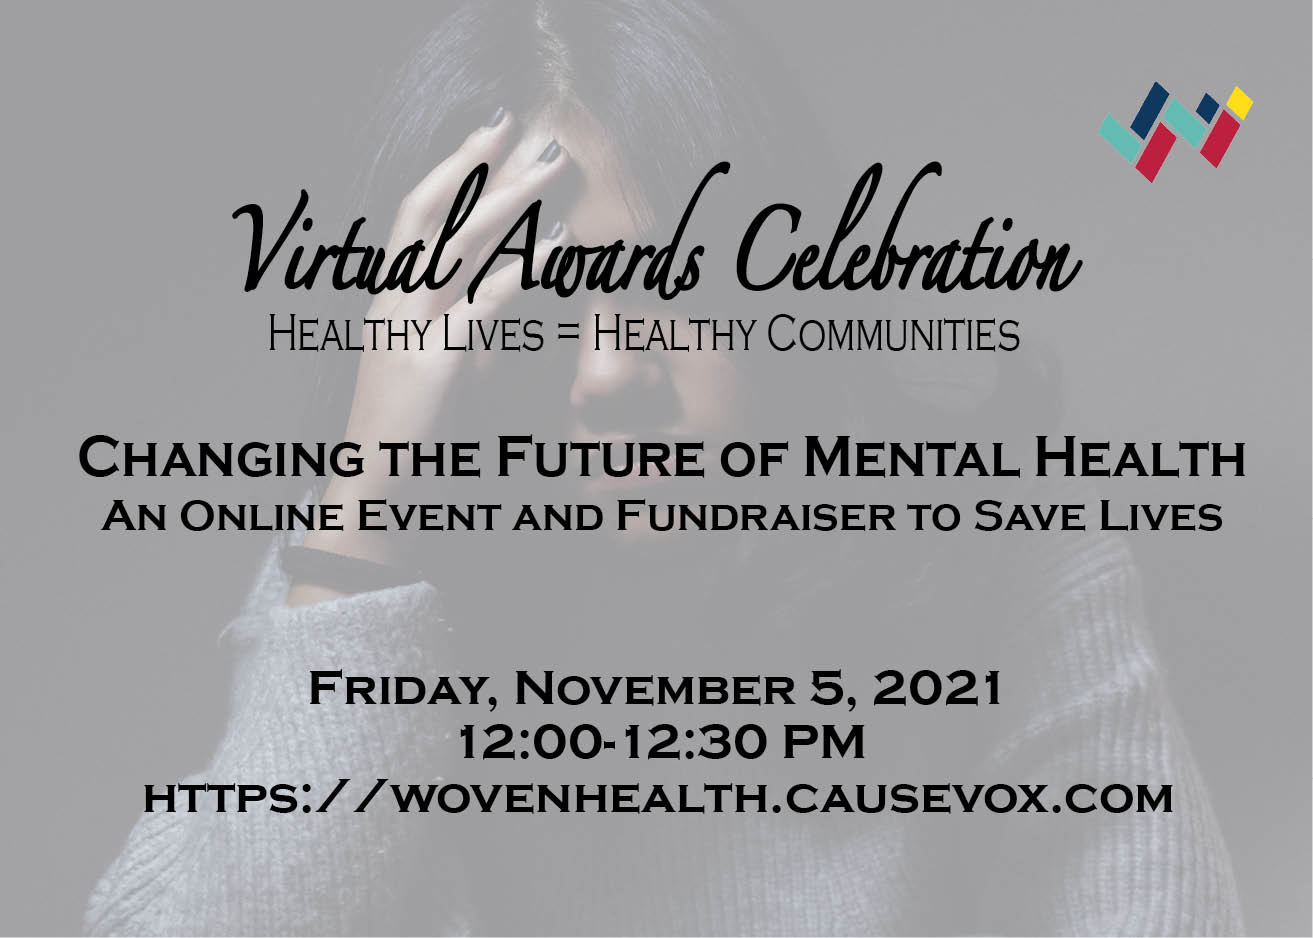 Woven Health Virtual Awards Celebration